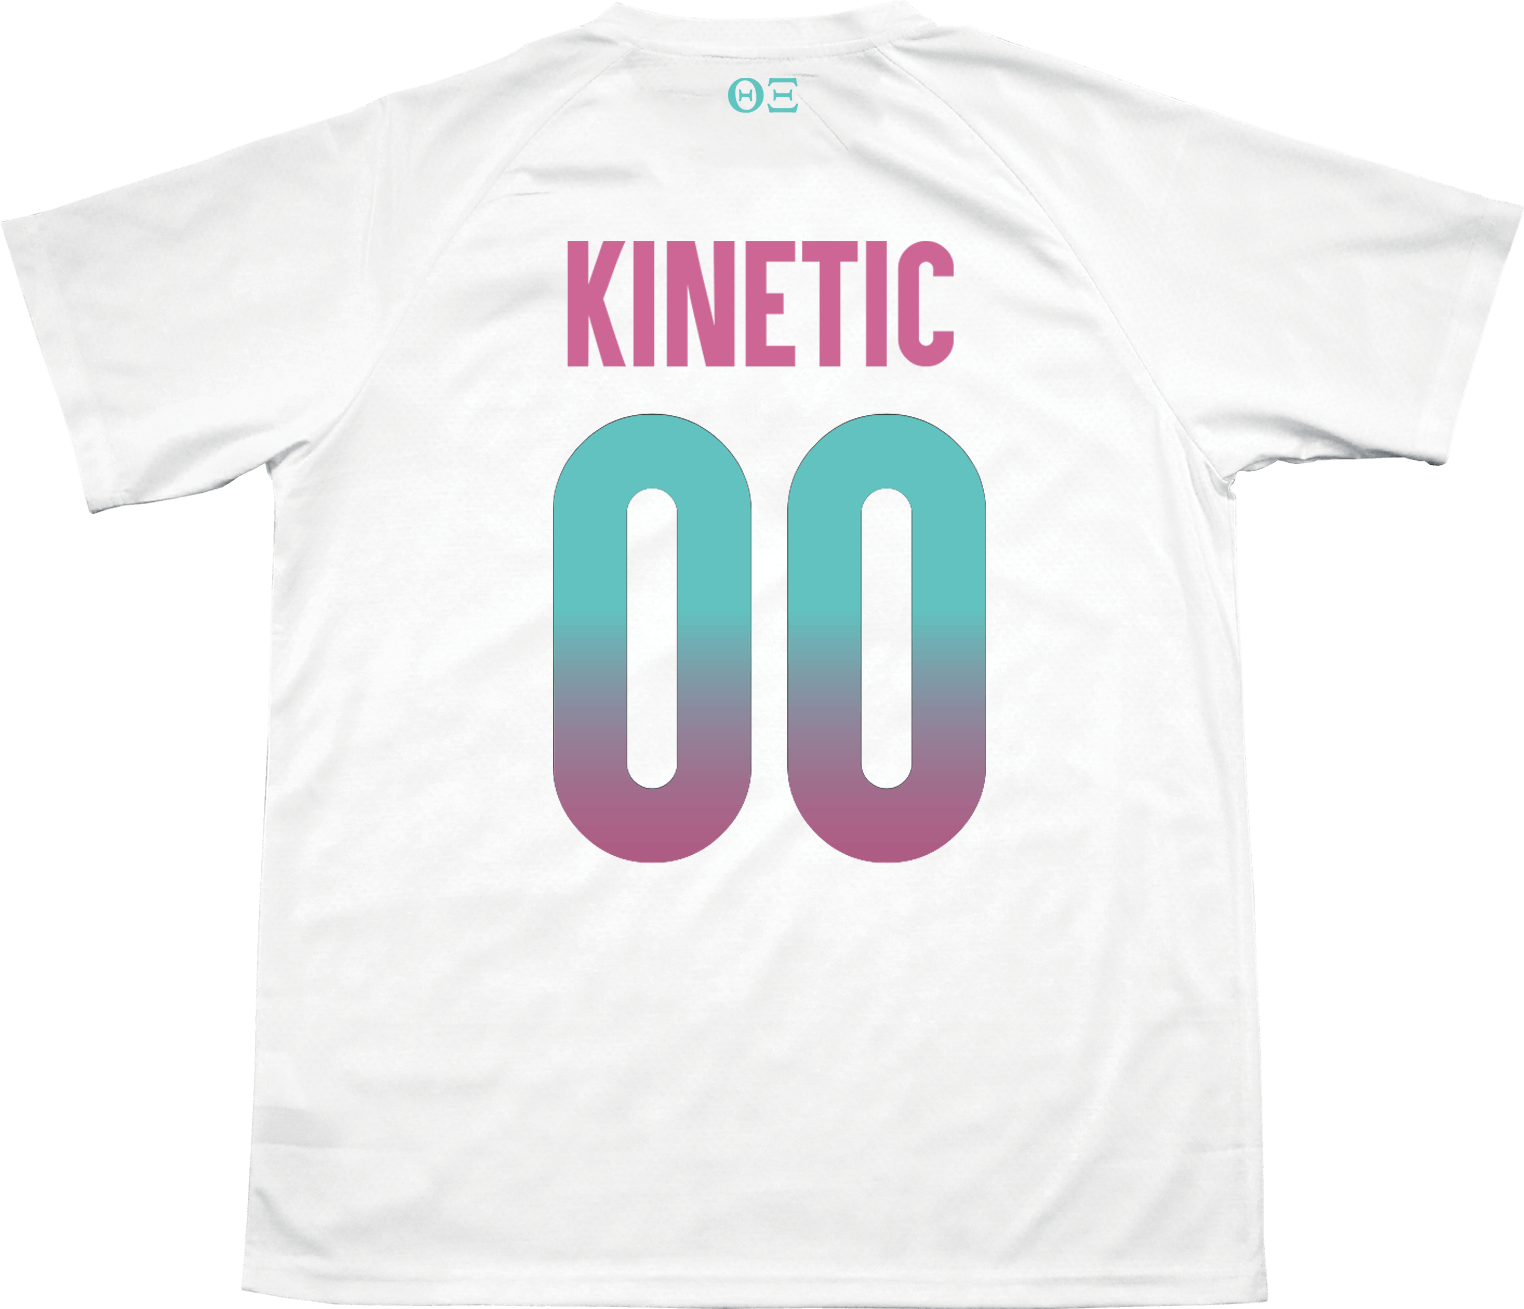 Theta Xi - White Candy Floss Soccer Jersey - Kinetic Society